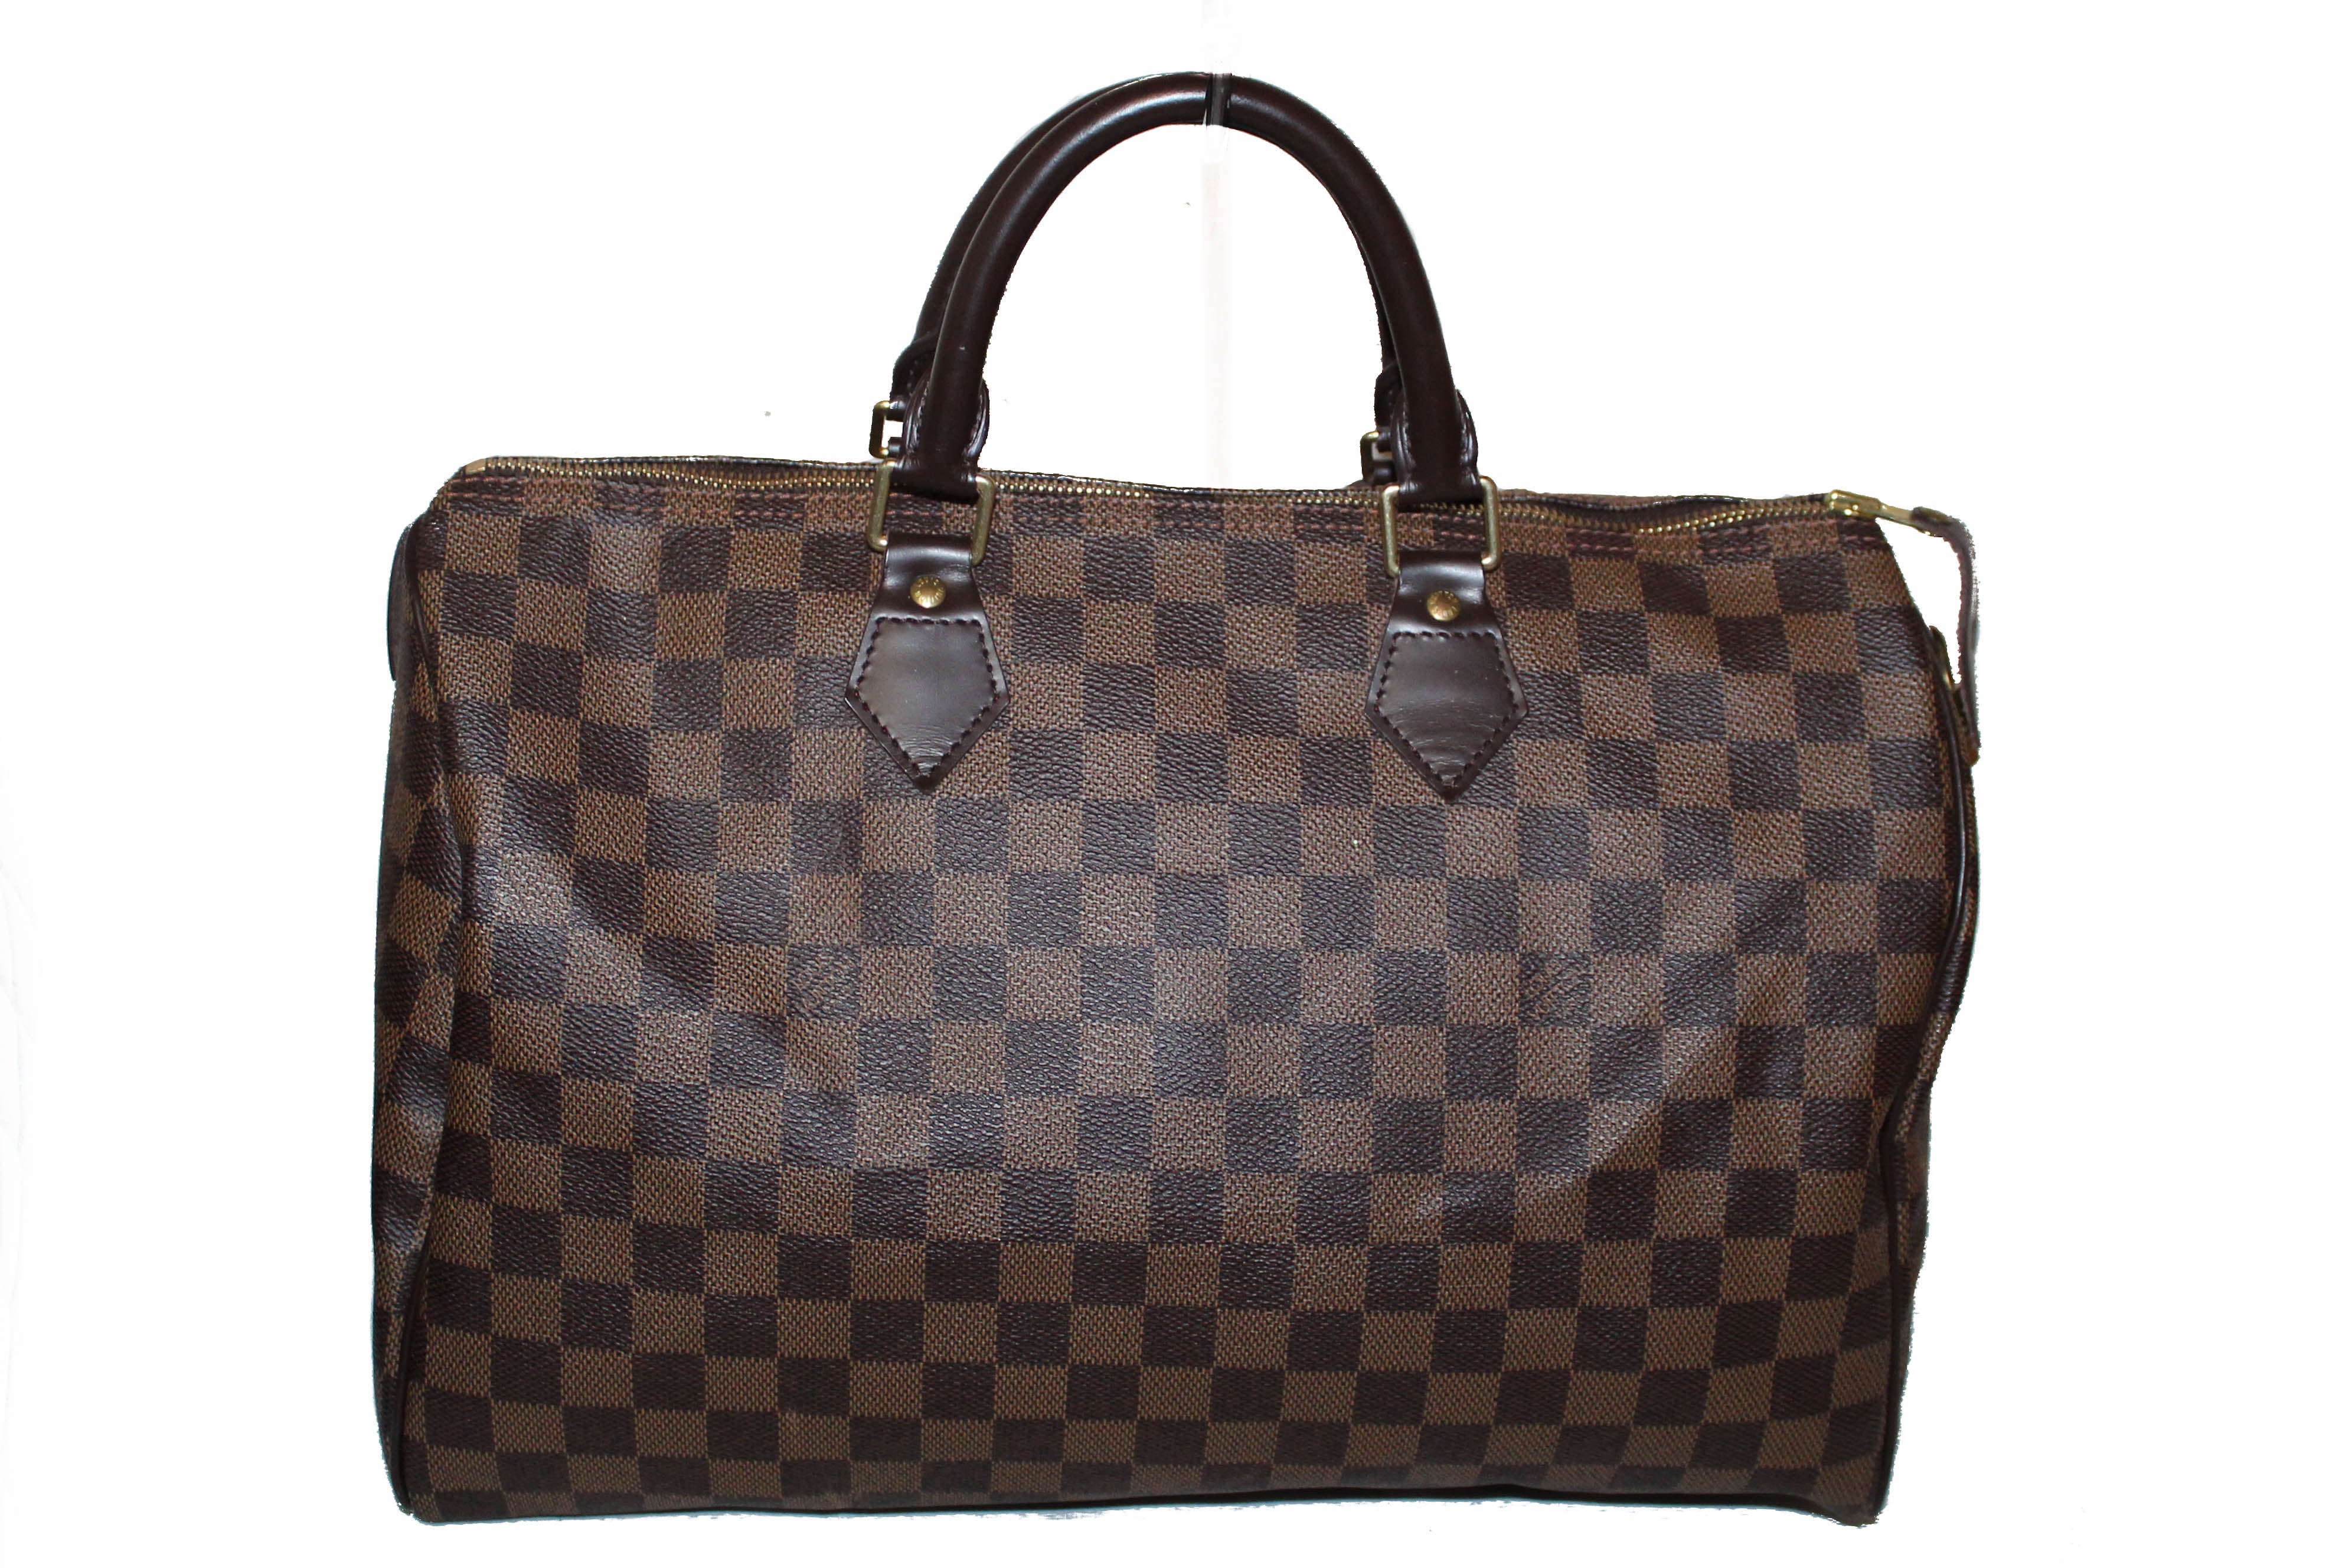 Authentic Louis Vuitton Damier Ebene Speedy 35 Handbag – Paris